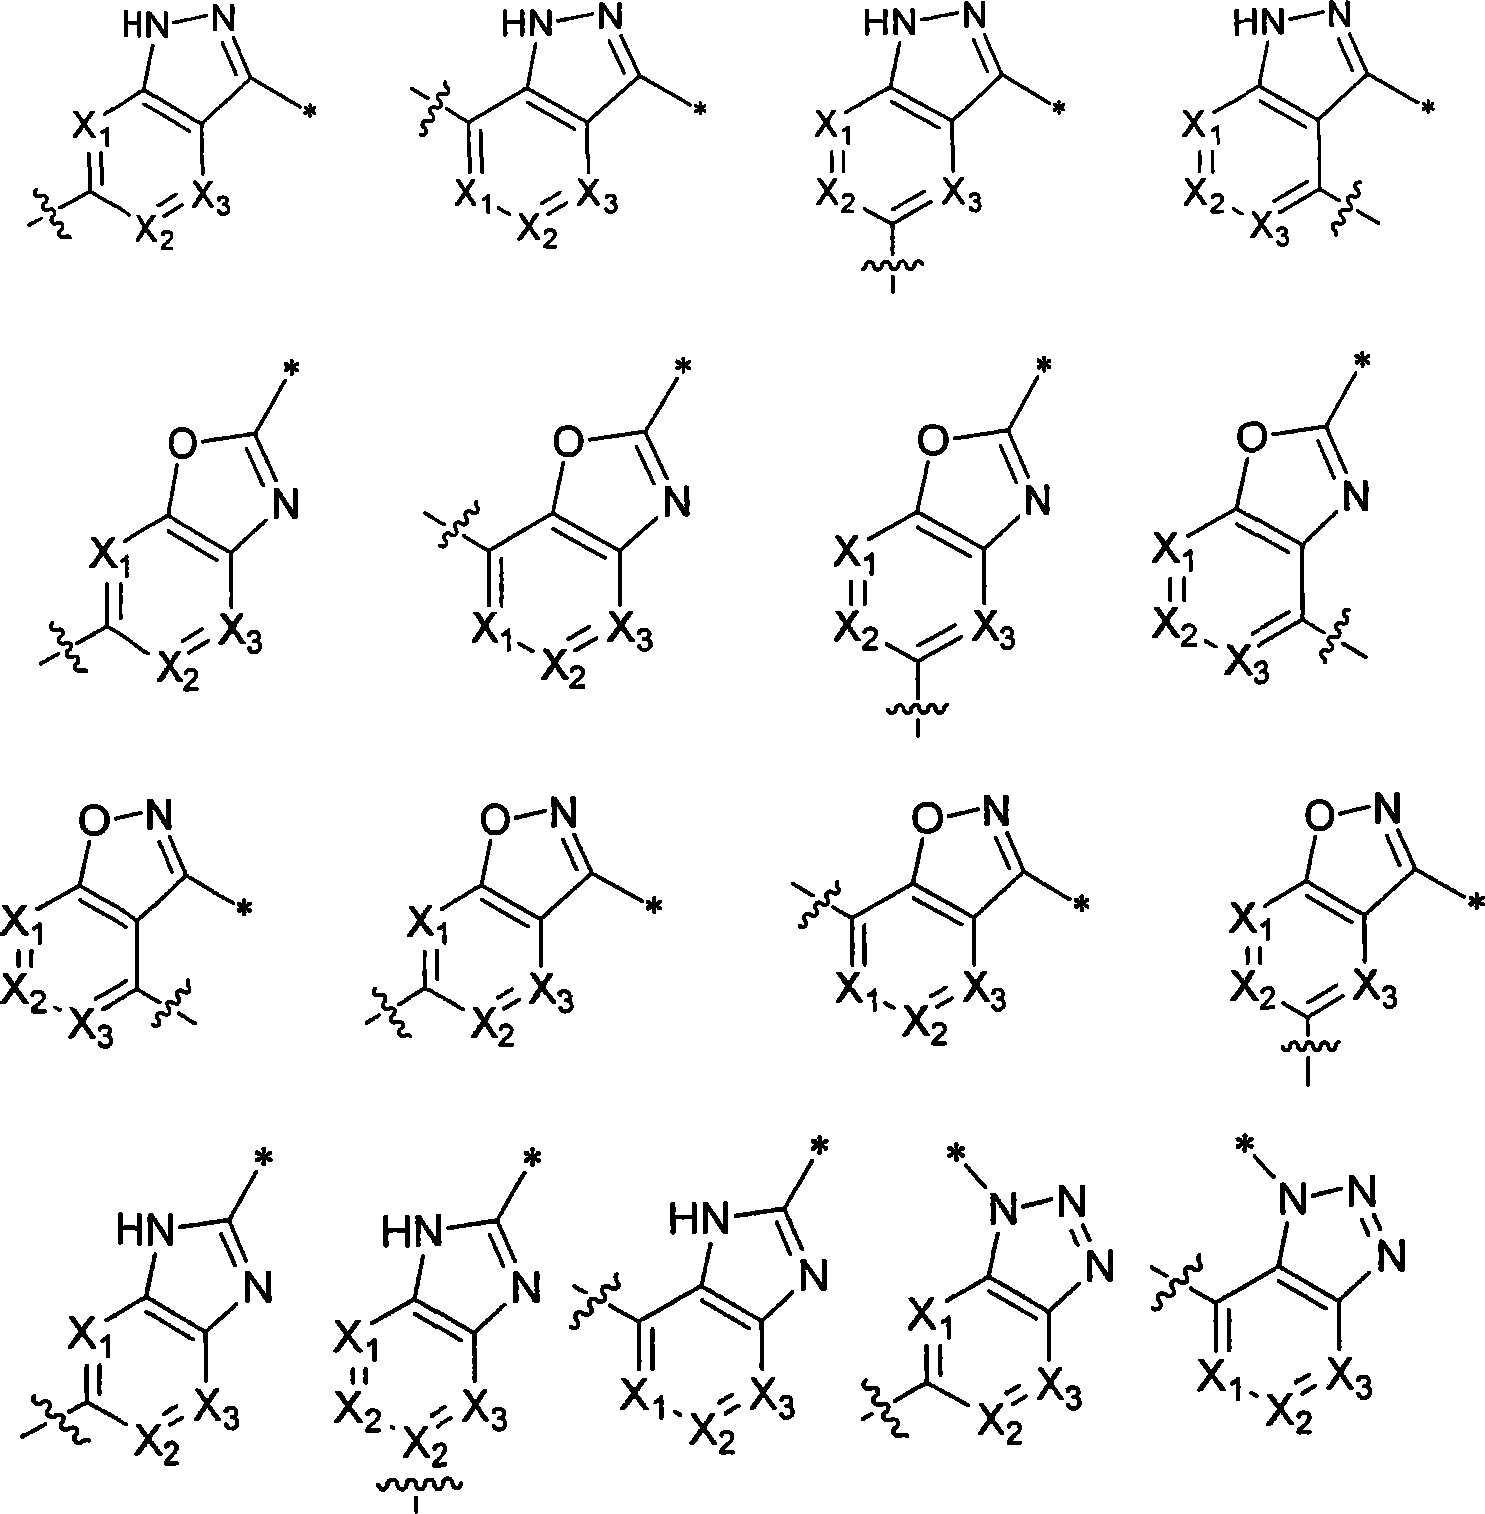 Imidazo[1,2-a]pyrazin-8-ylamines useful as modulators of kinase activity